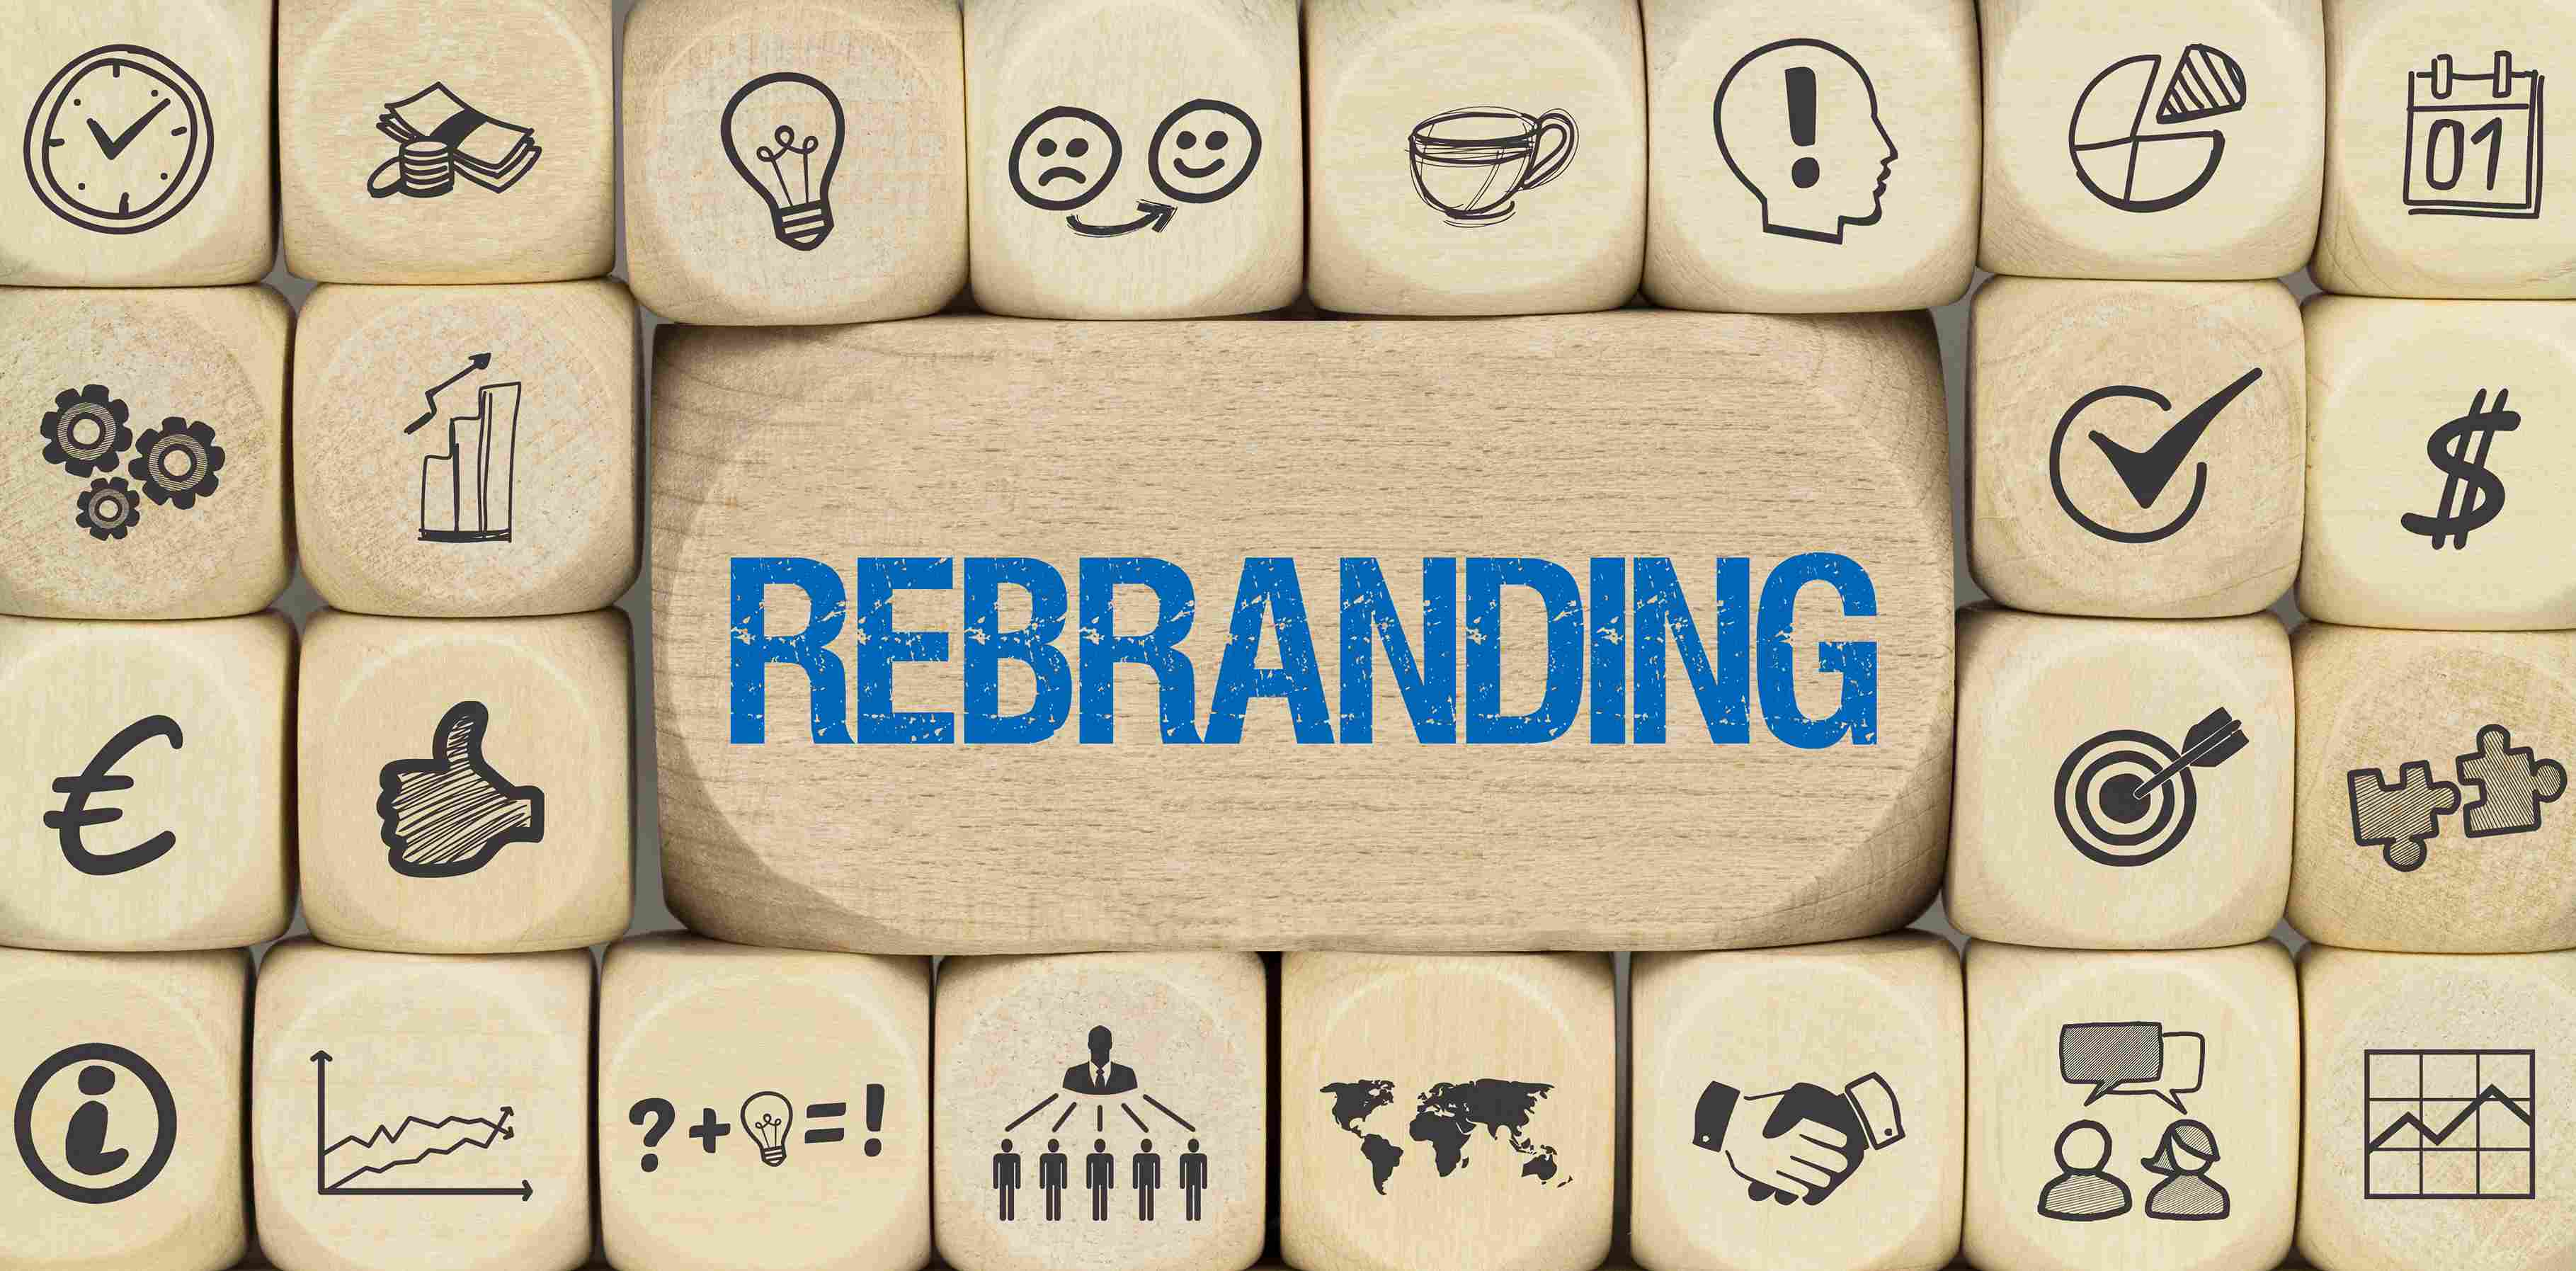 rebranding, rebranding significado, rebranding de marca, ejemplo de rebranding